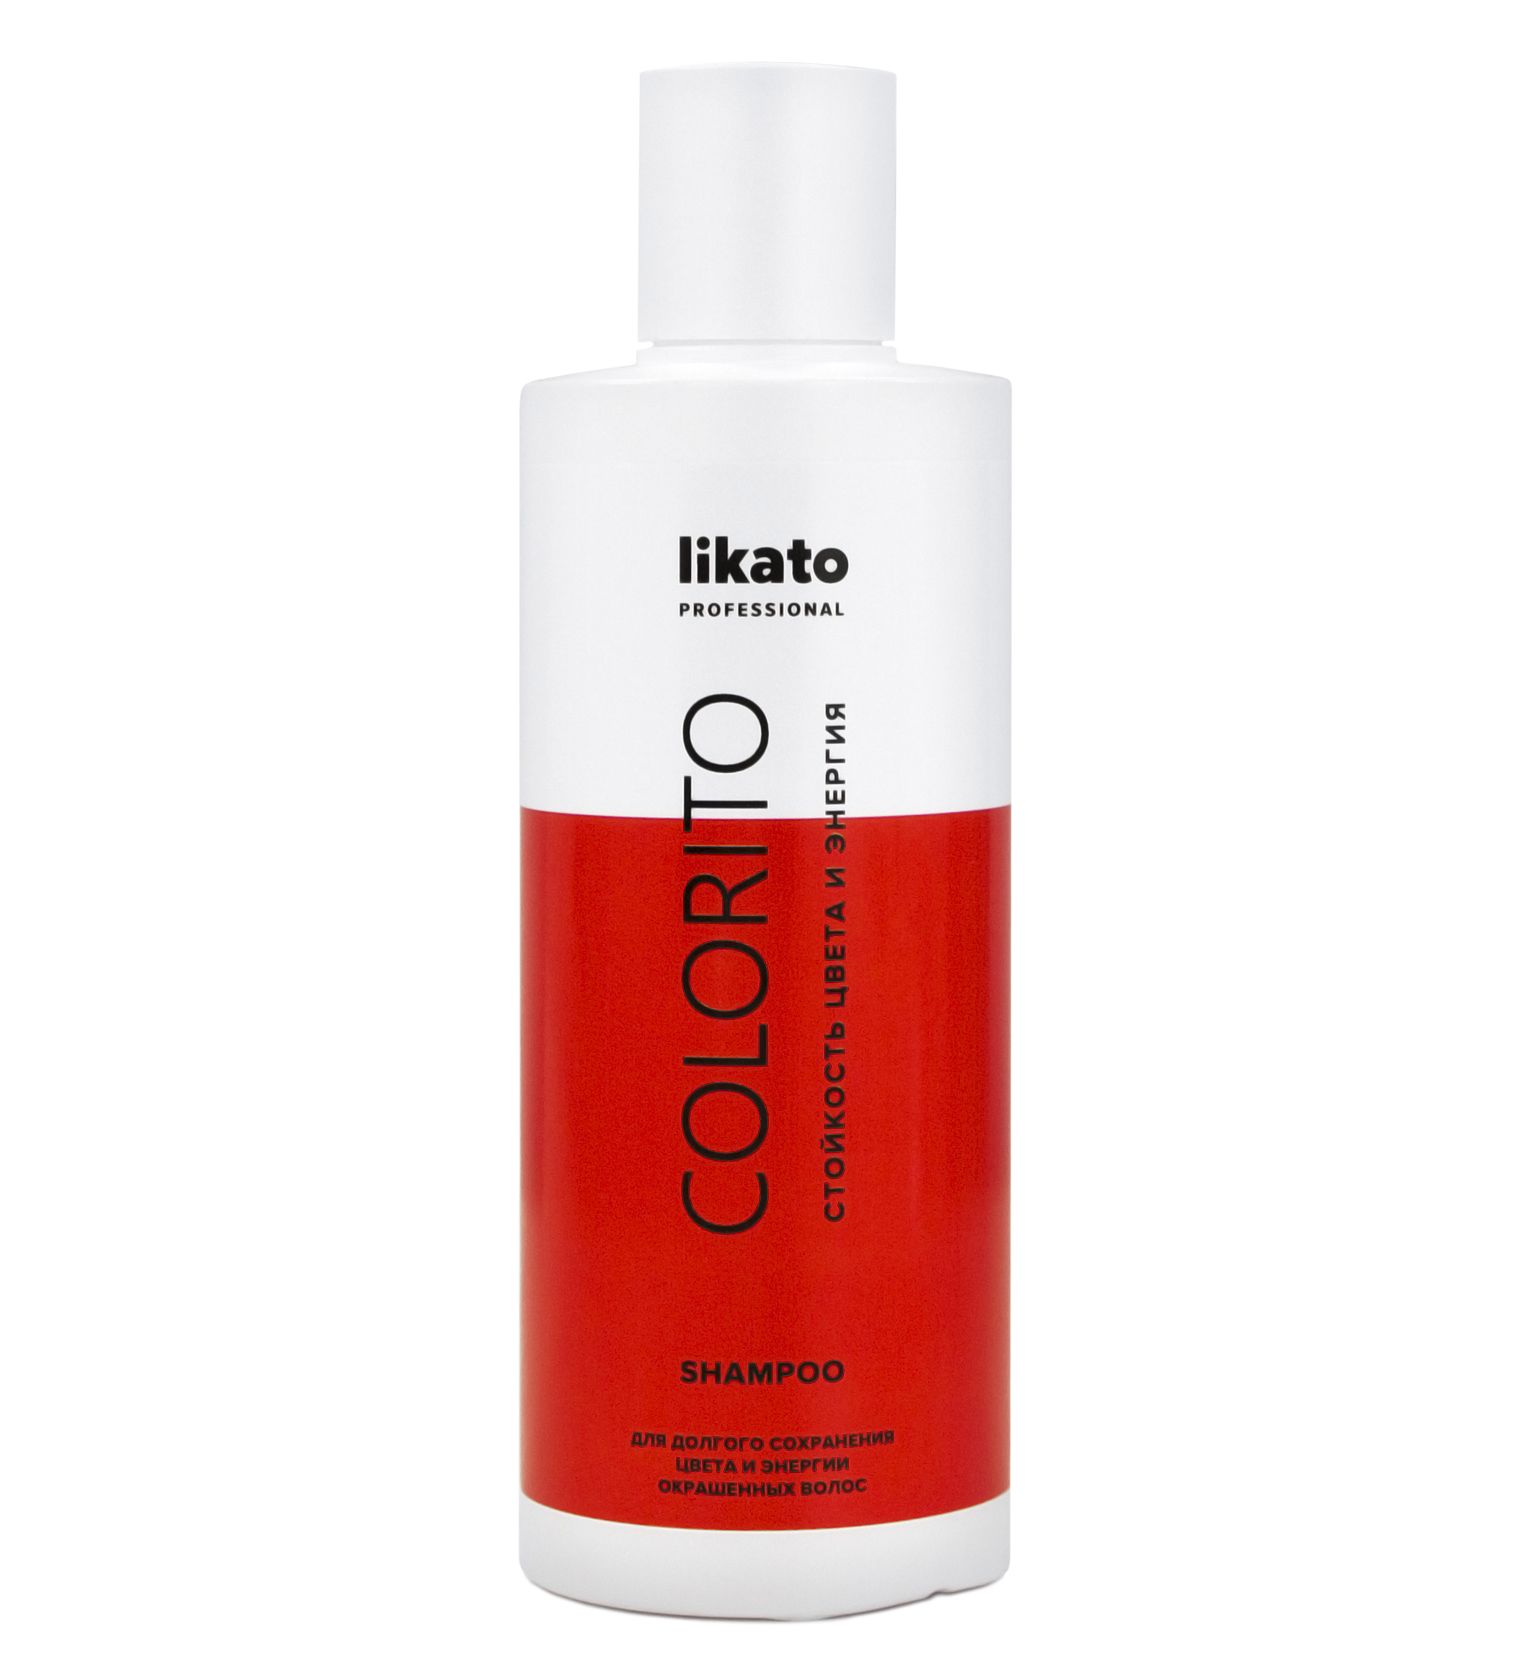 Likato Шампунь-энергетик Likato Professional Colorito для окрашенных волос (250 мл)